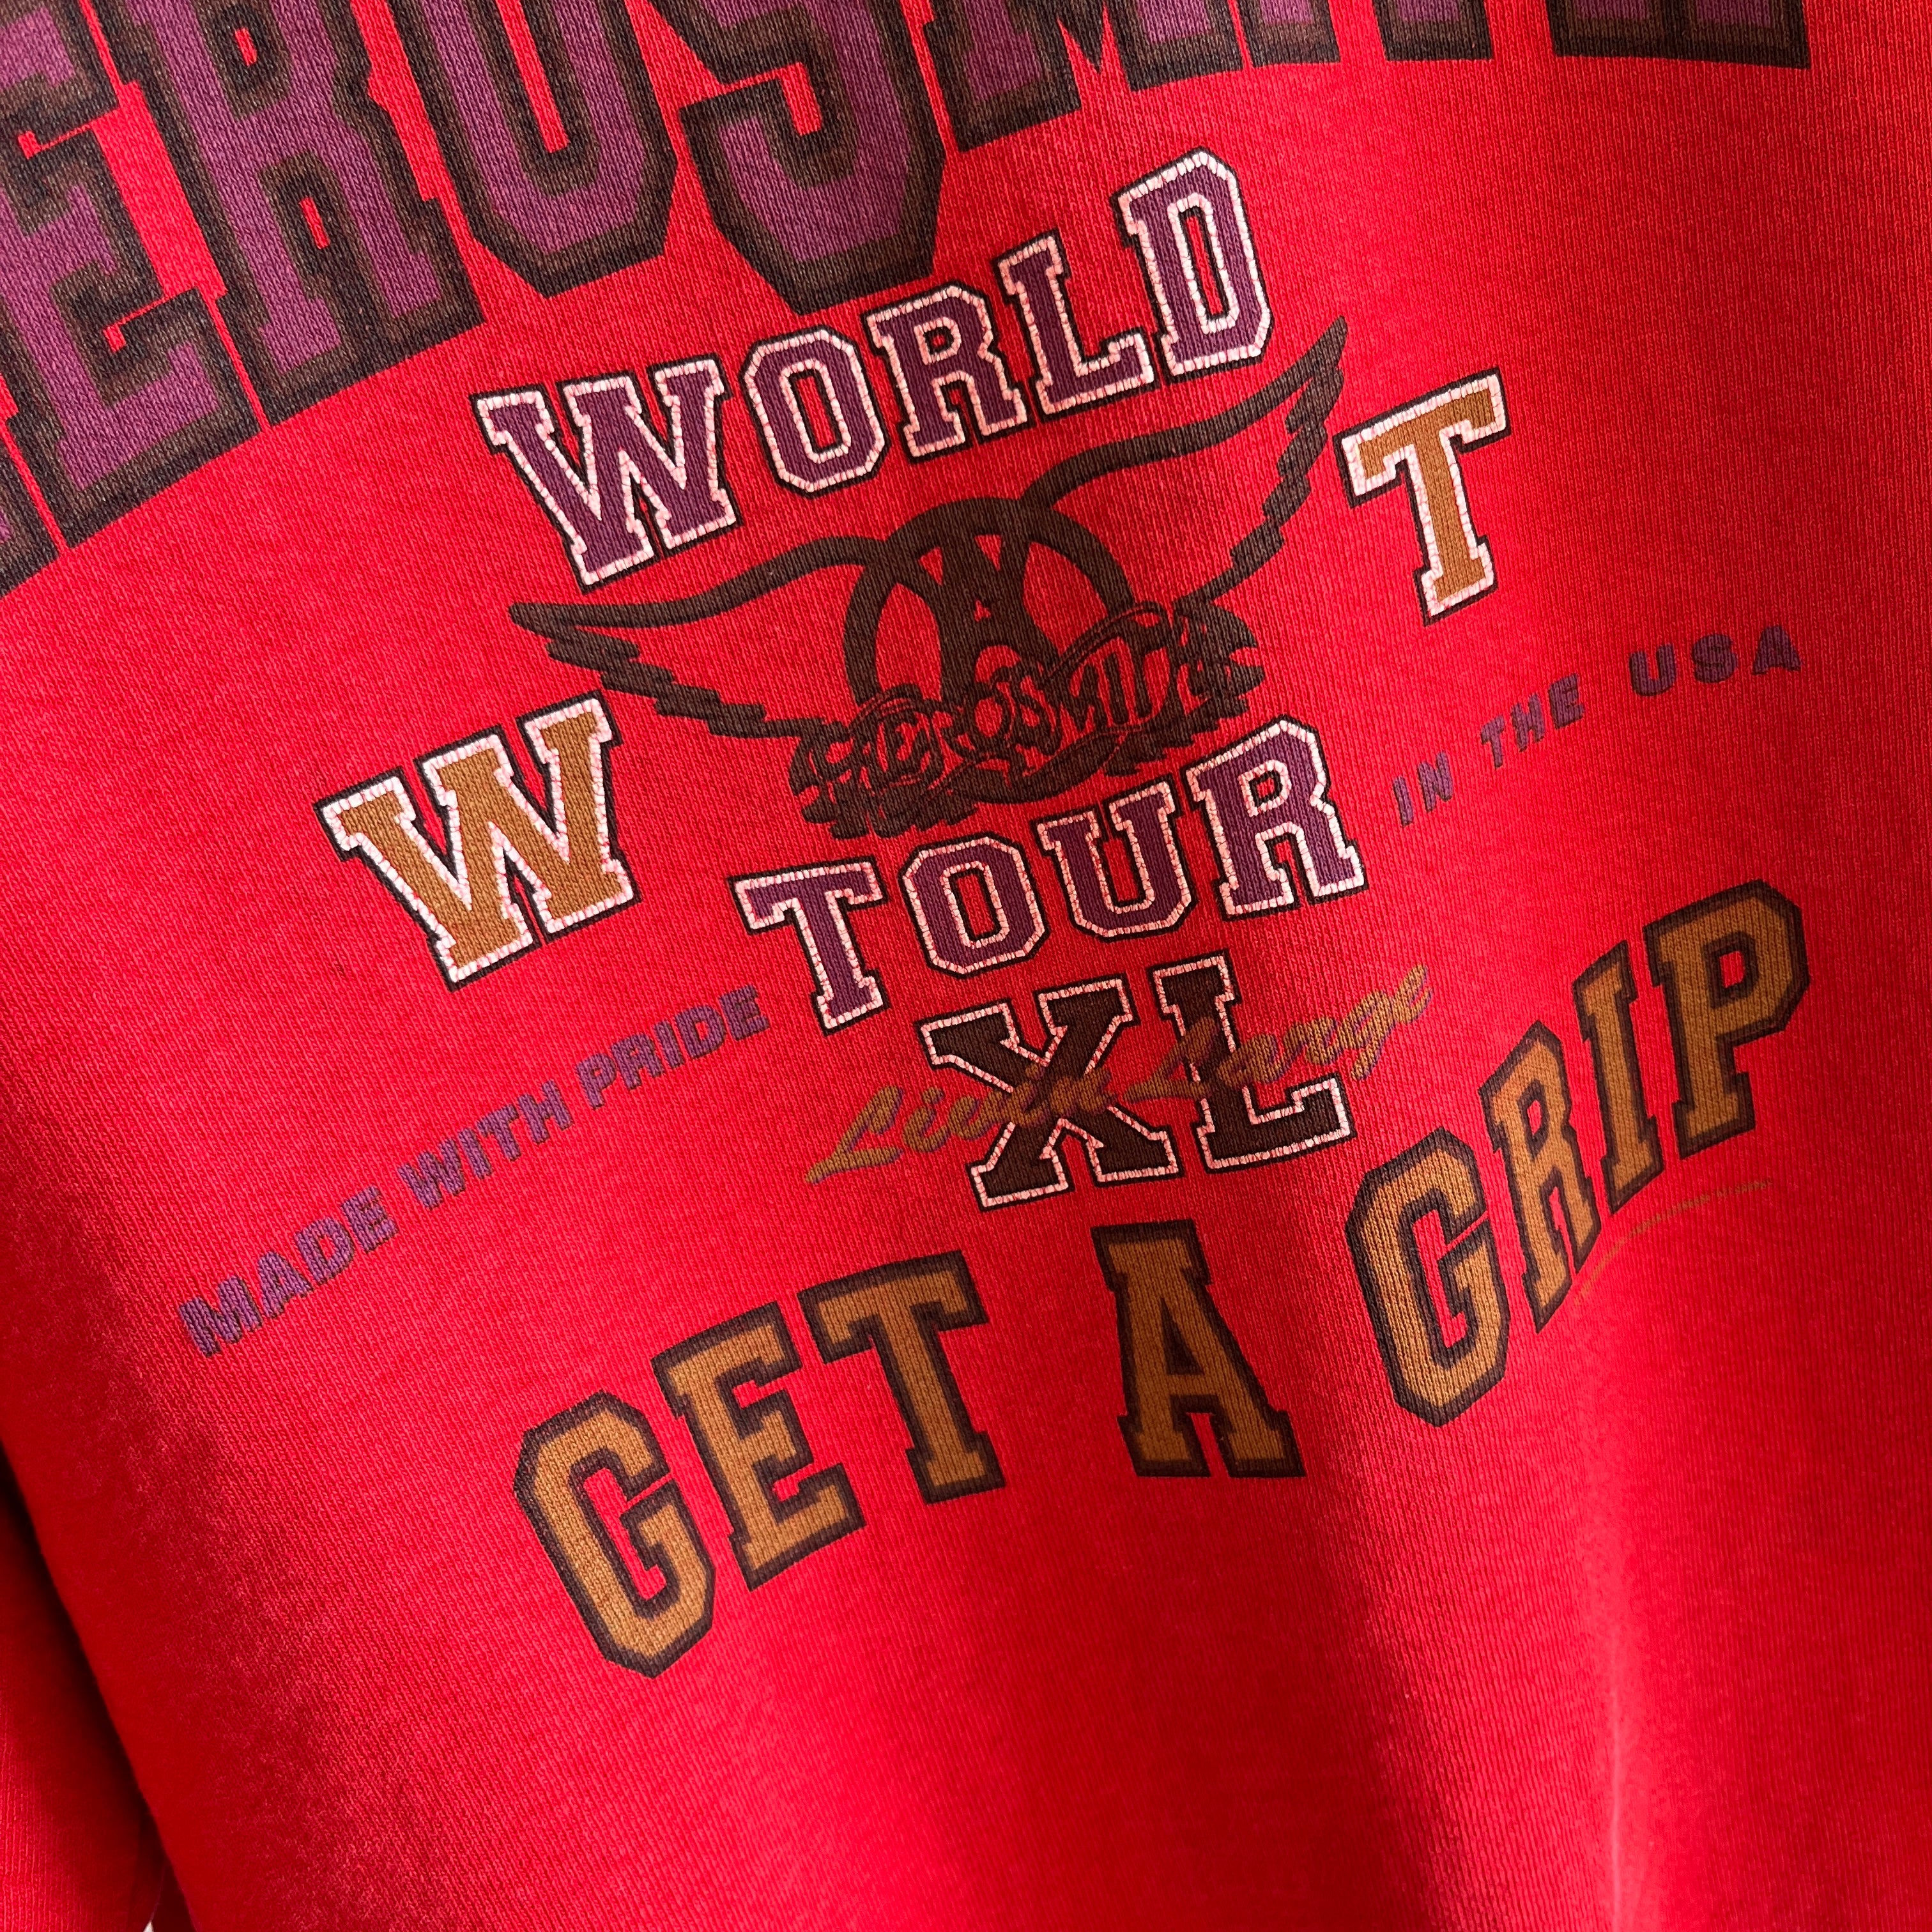 1993 Aerosmith Get A Grip Tour Heavyweight Sweatshirt - WOAH